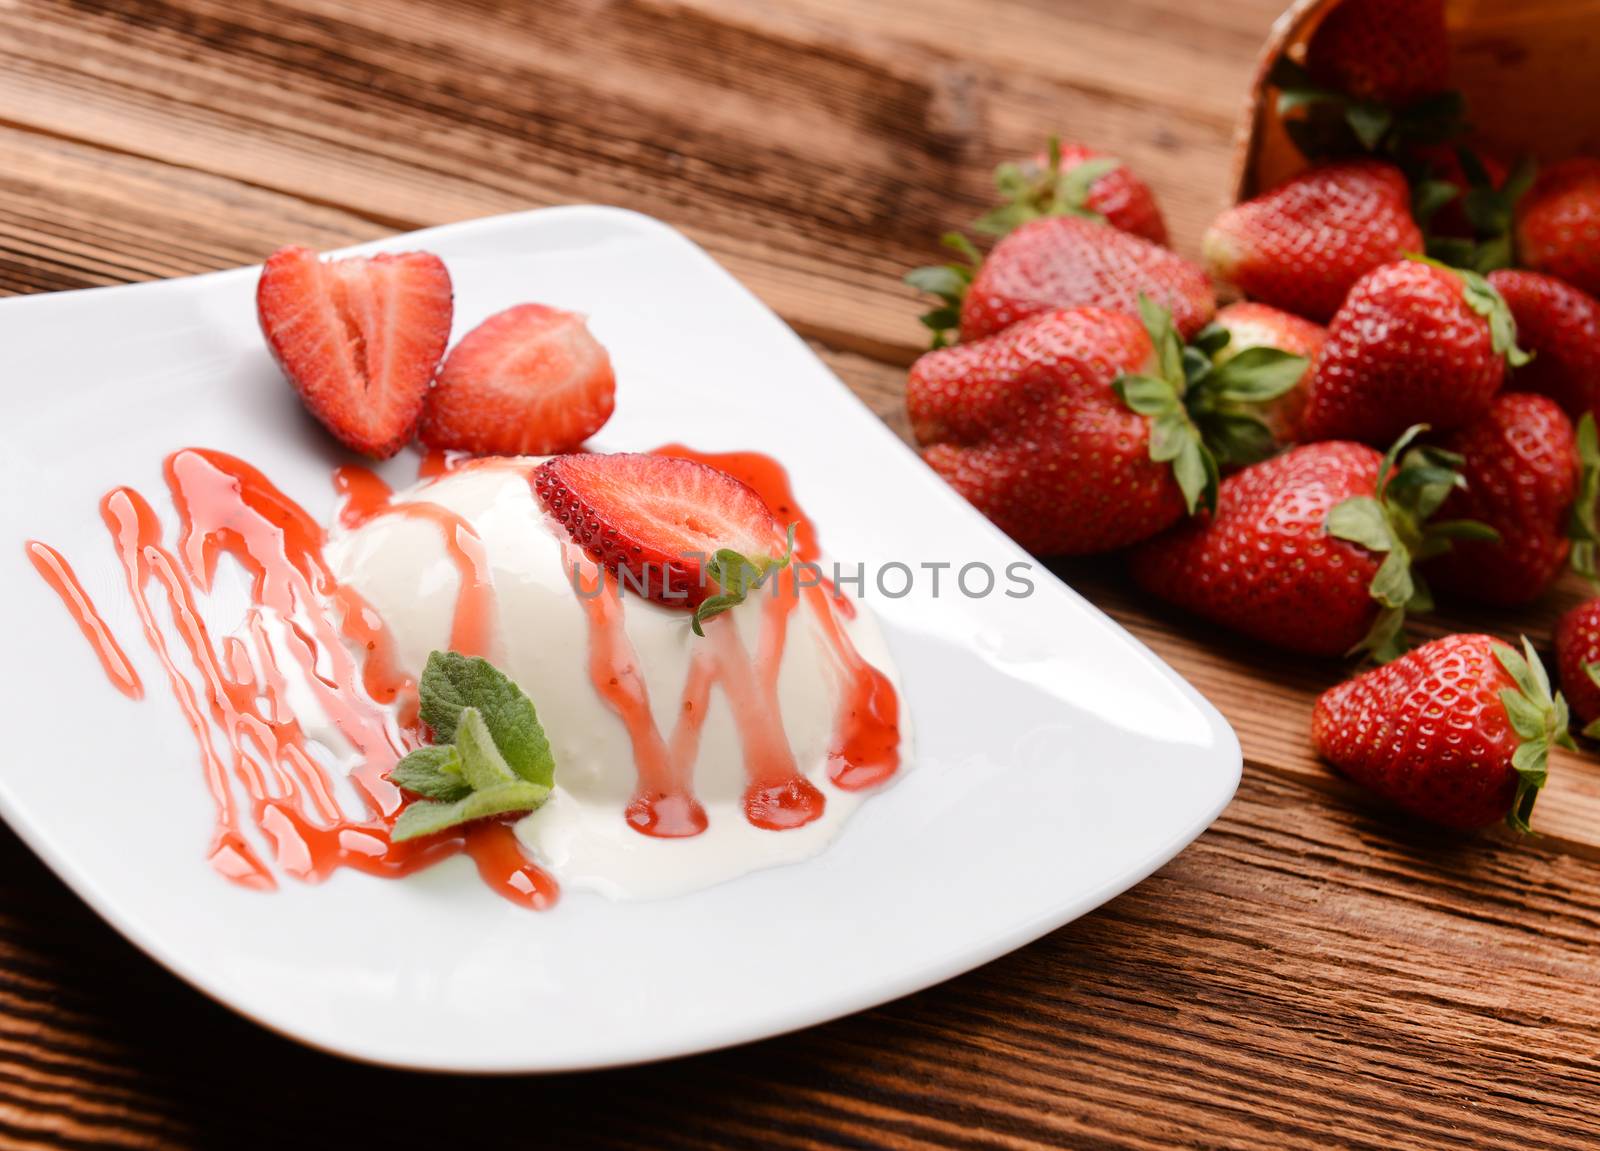 Italian dessert panna cotta with fresh strawberries